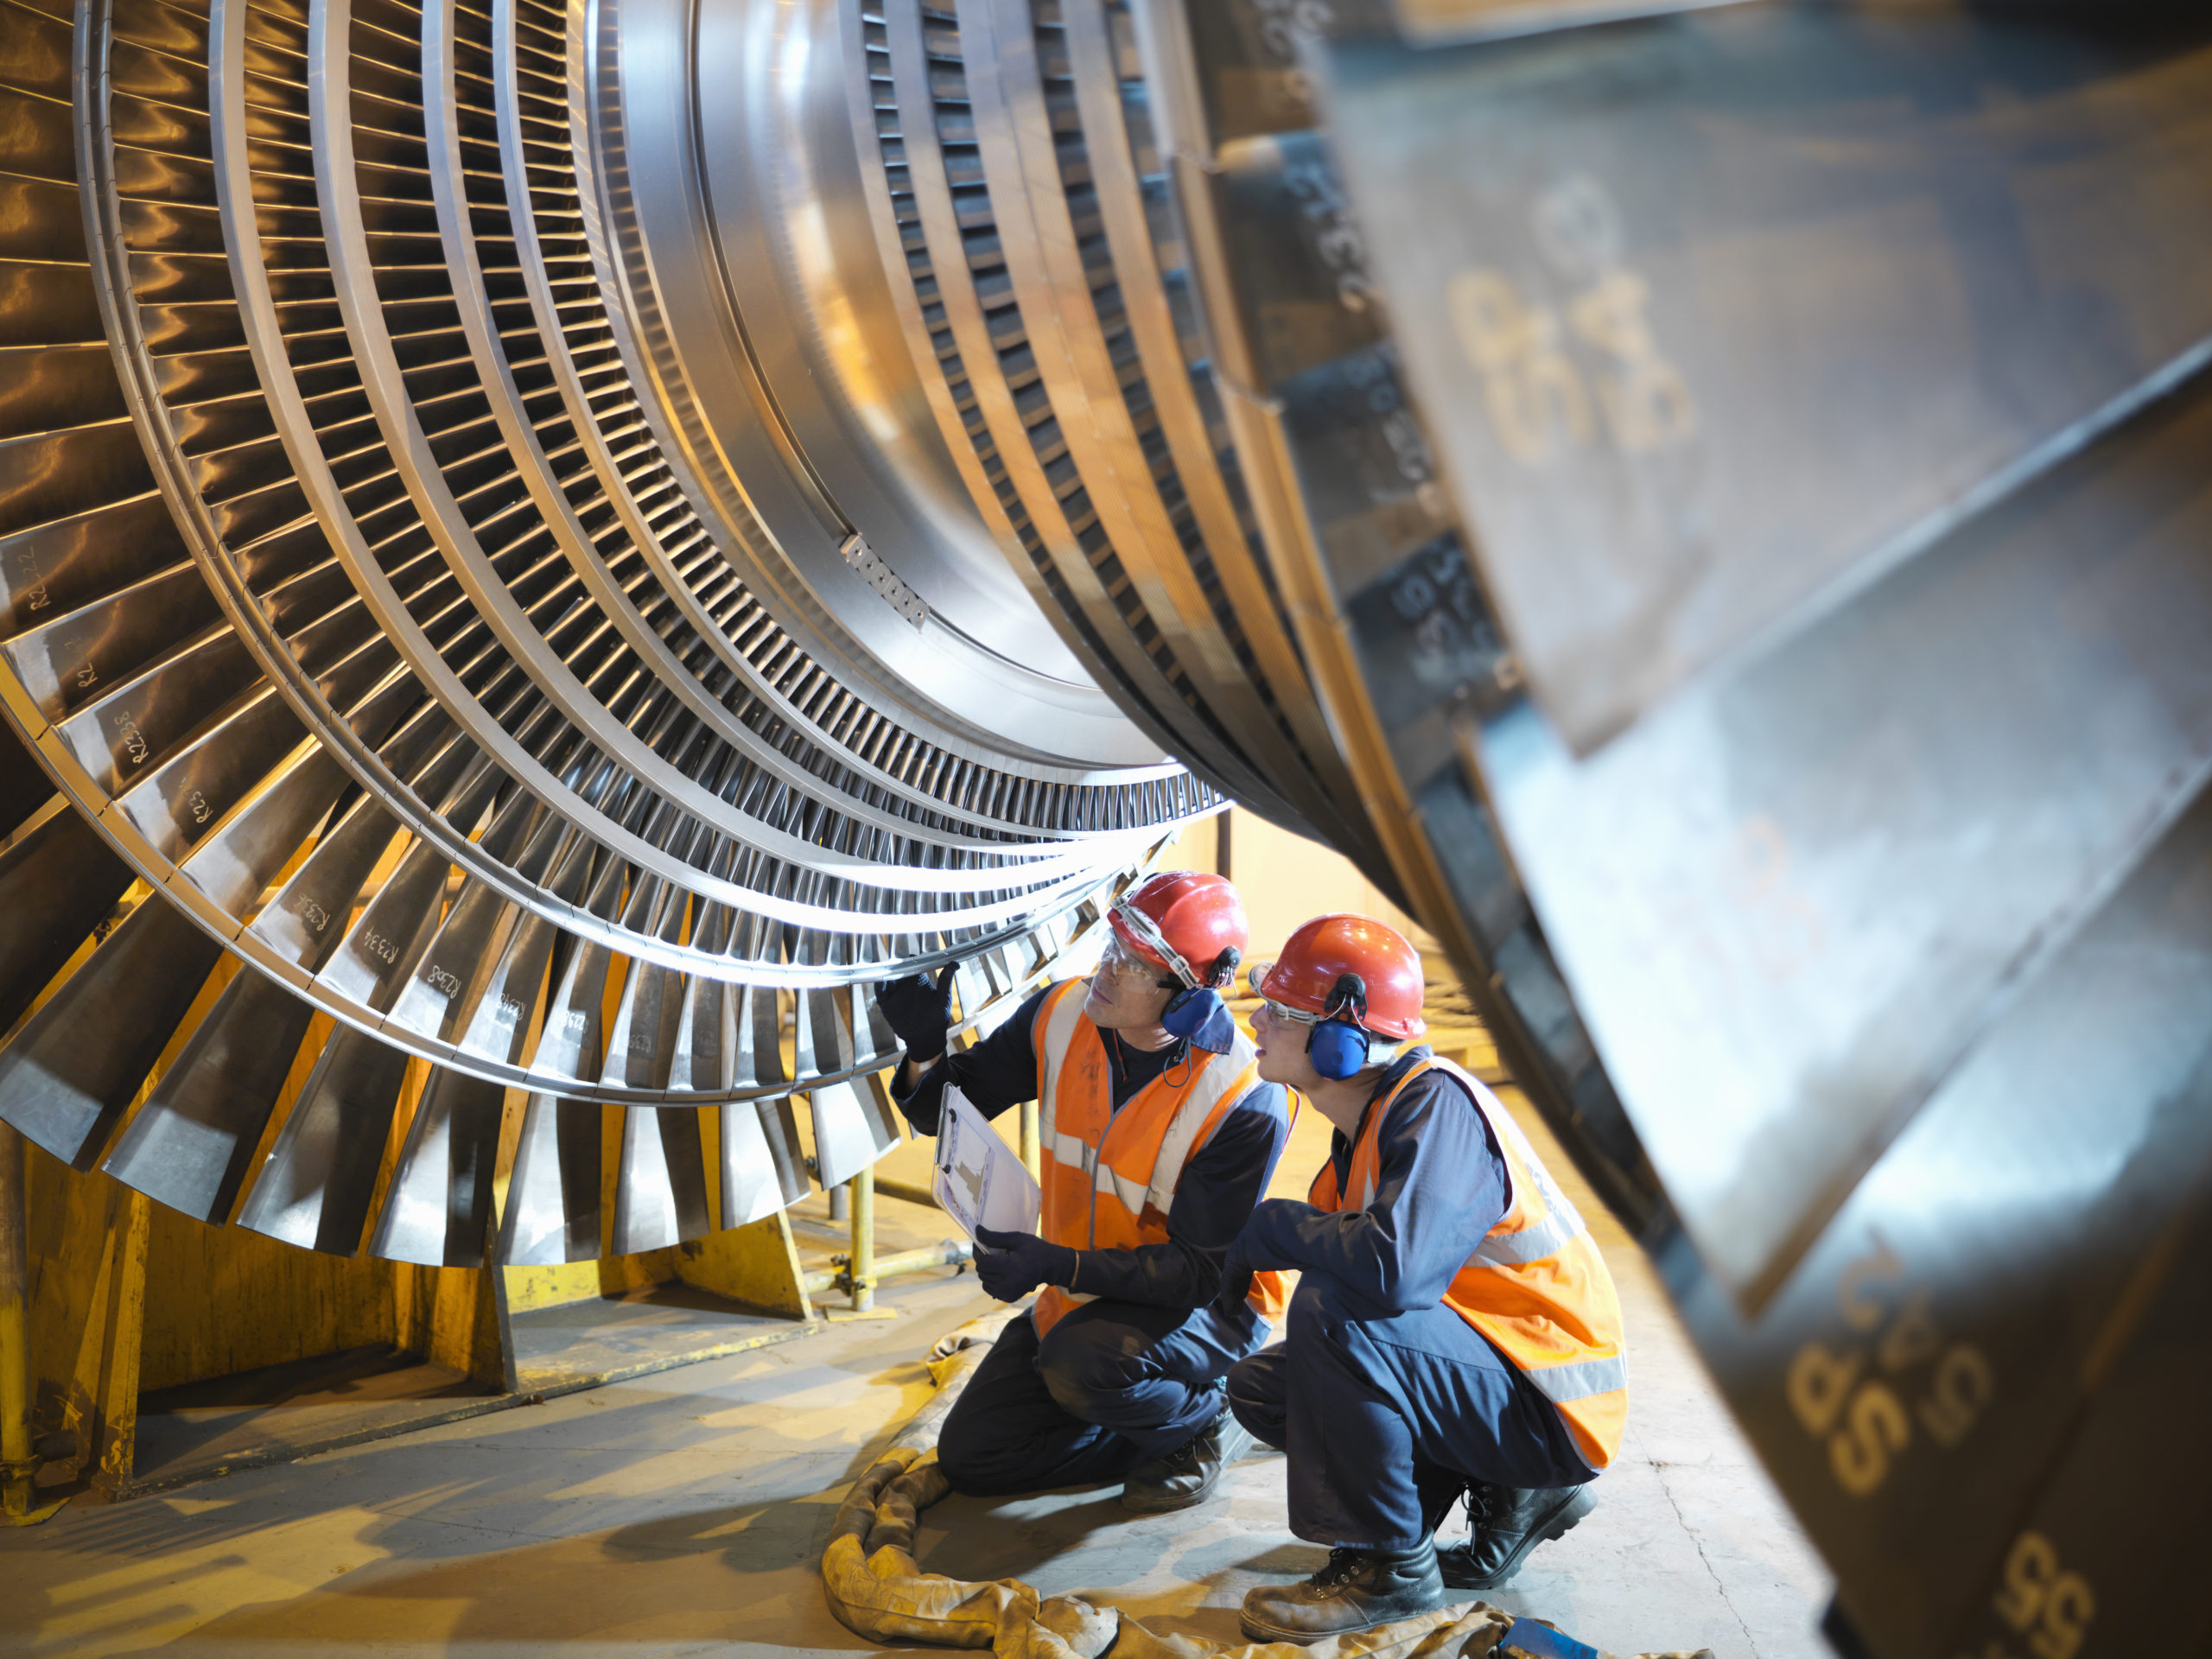 Workers inspecting turbine